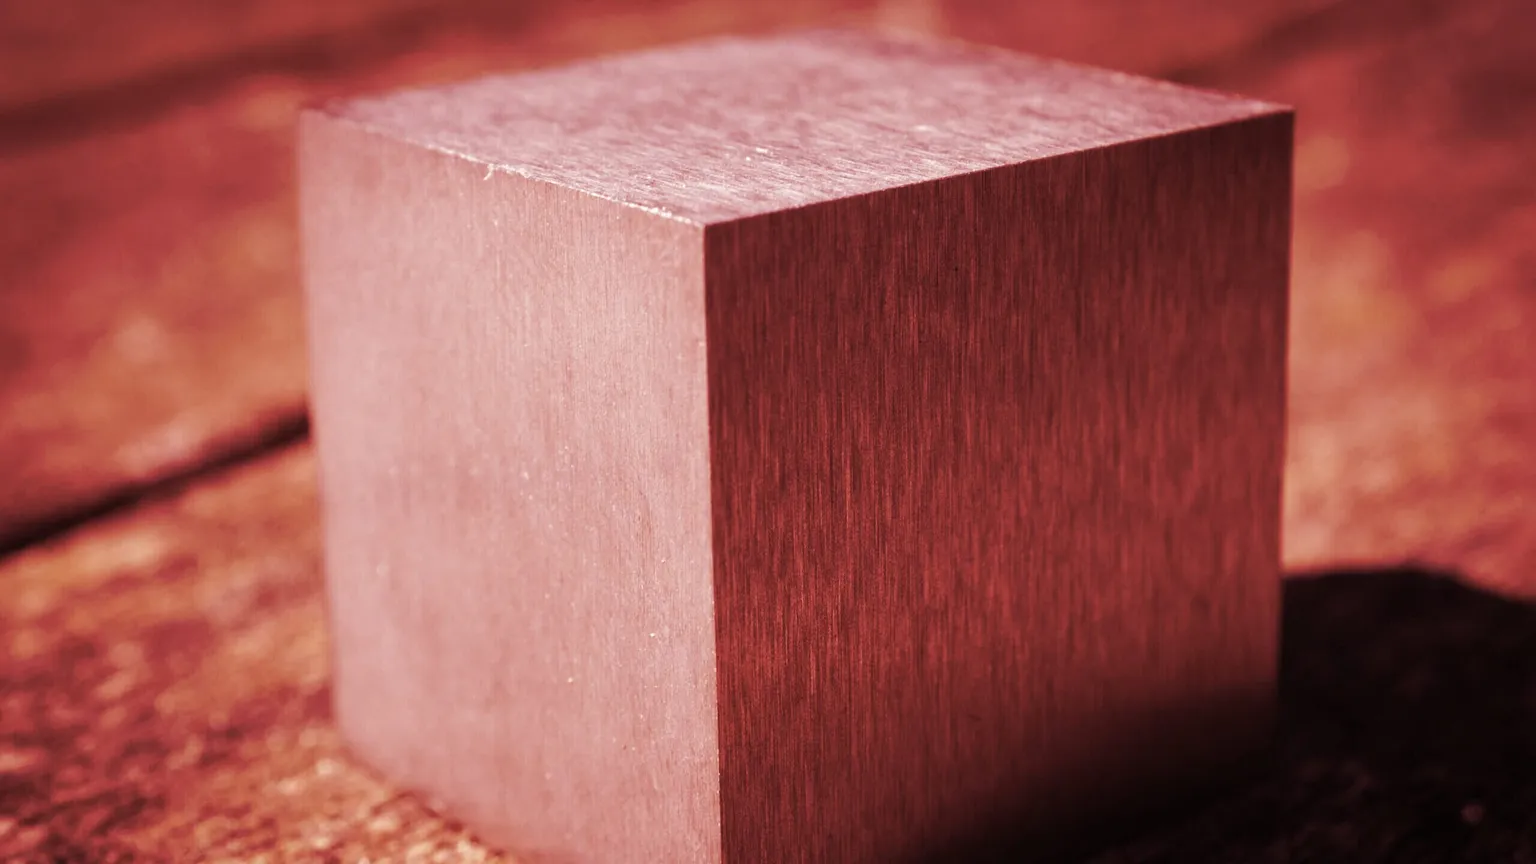 A tungsten cube. Image: Steve Hodgson via Flickr (CC BY-SA 2.0)